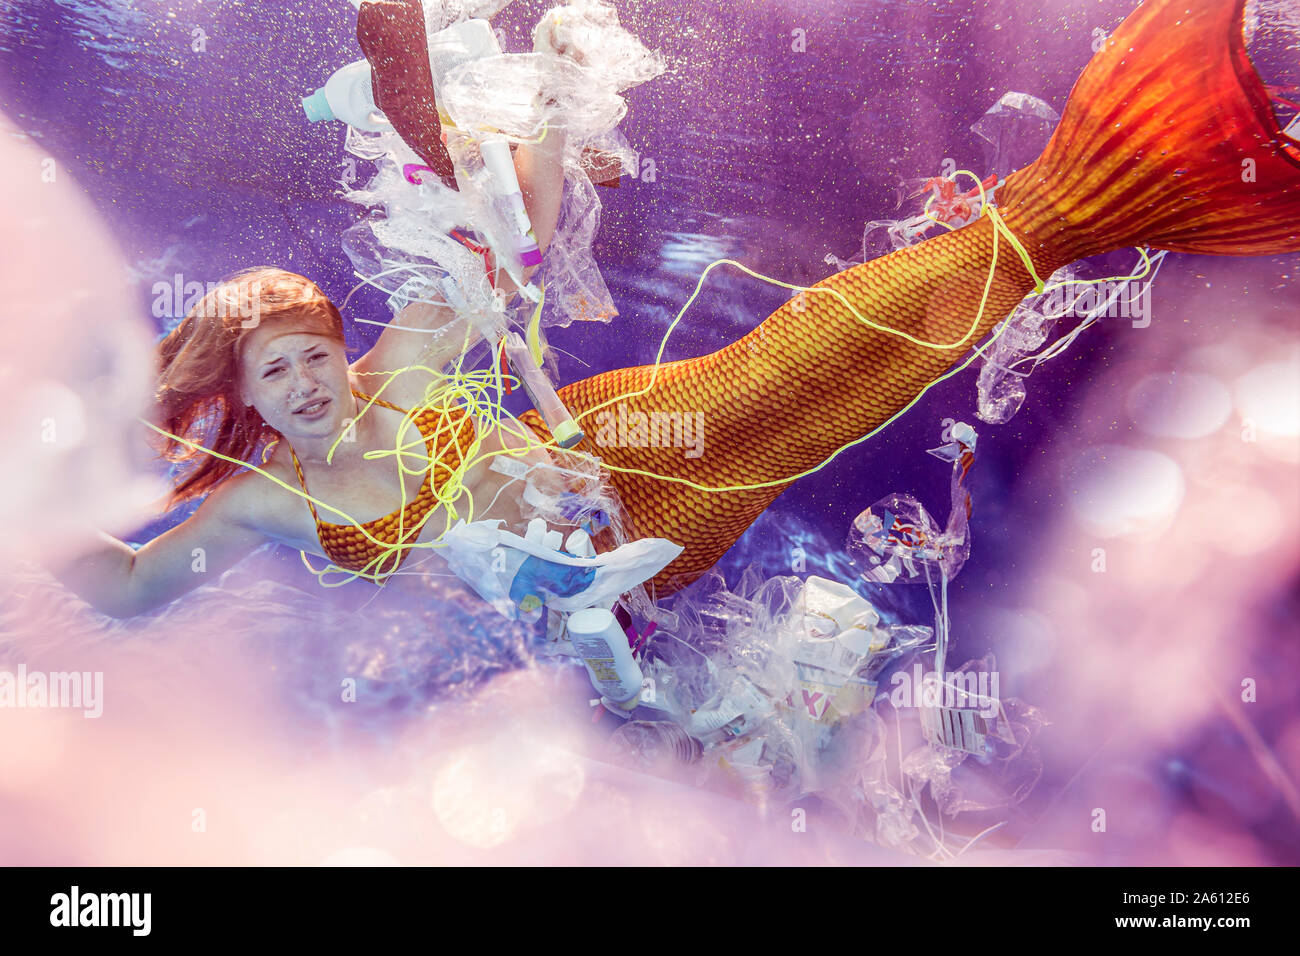 Teenage Meerjungfrau Girl von Kunststoffabfällen umgeben unter Wasser Stockfoto